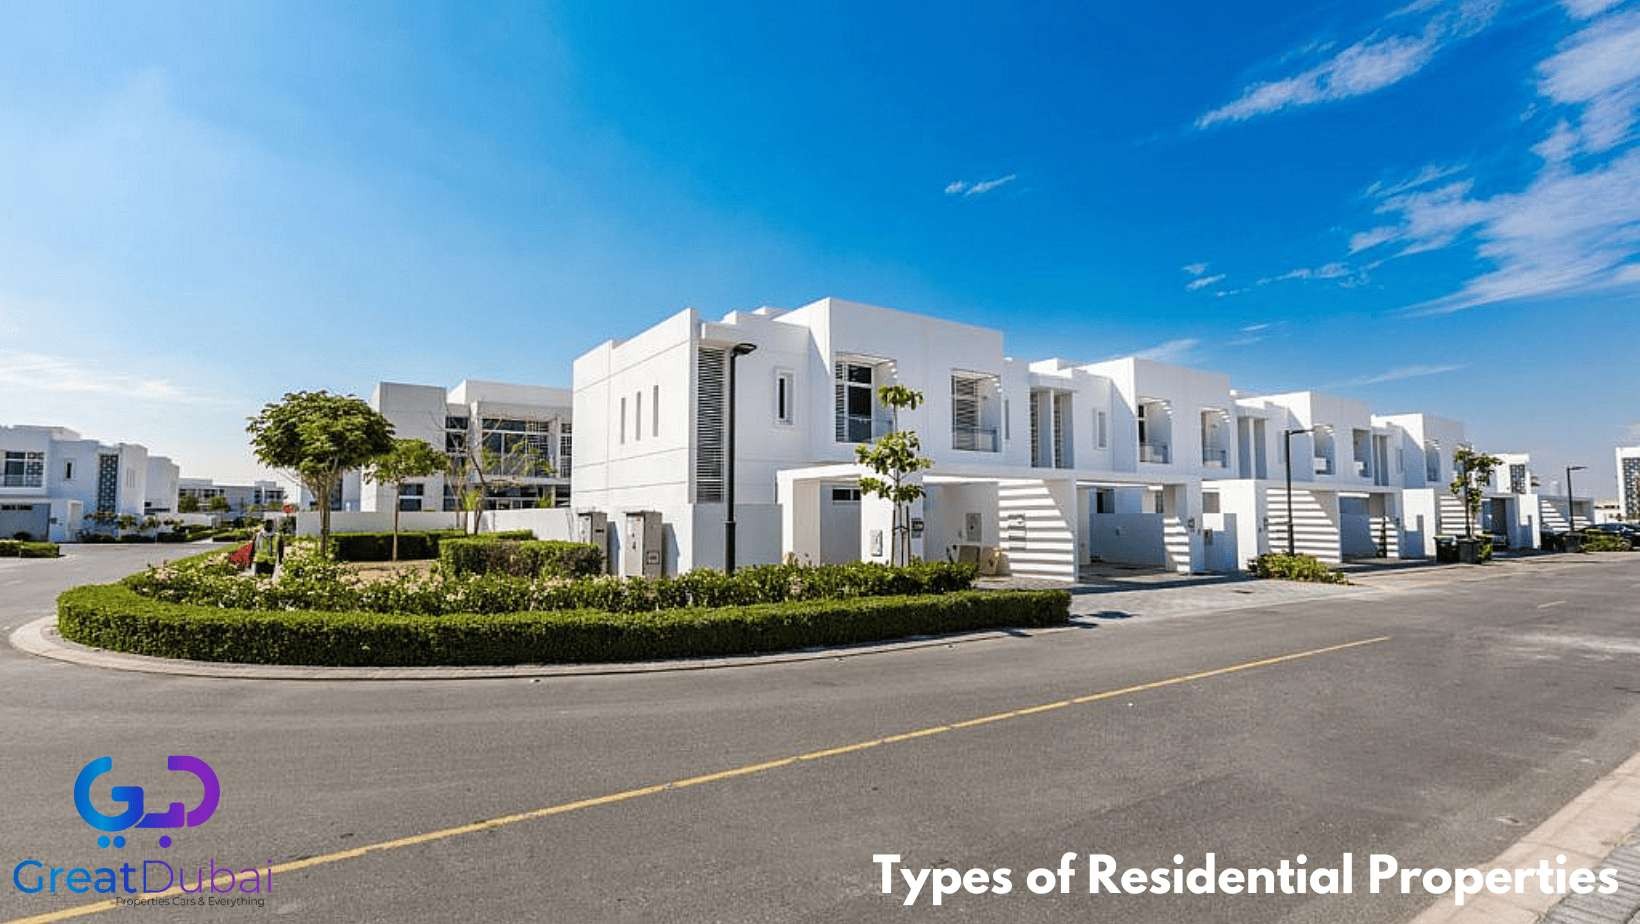 Types of Residential Properties